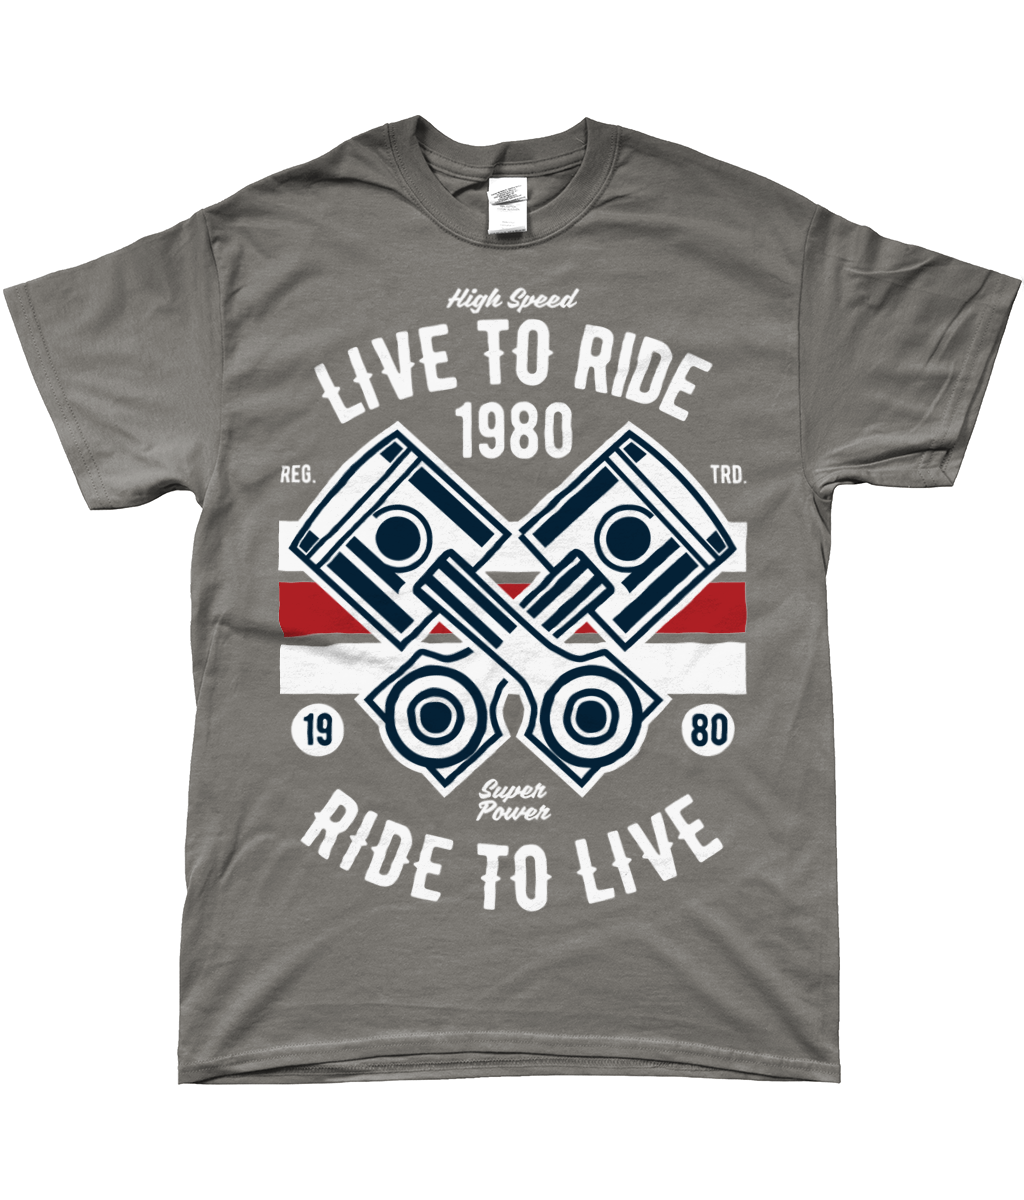 Live To Ride 1980 – Gildan Softstyle® Ringspun T-shirt